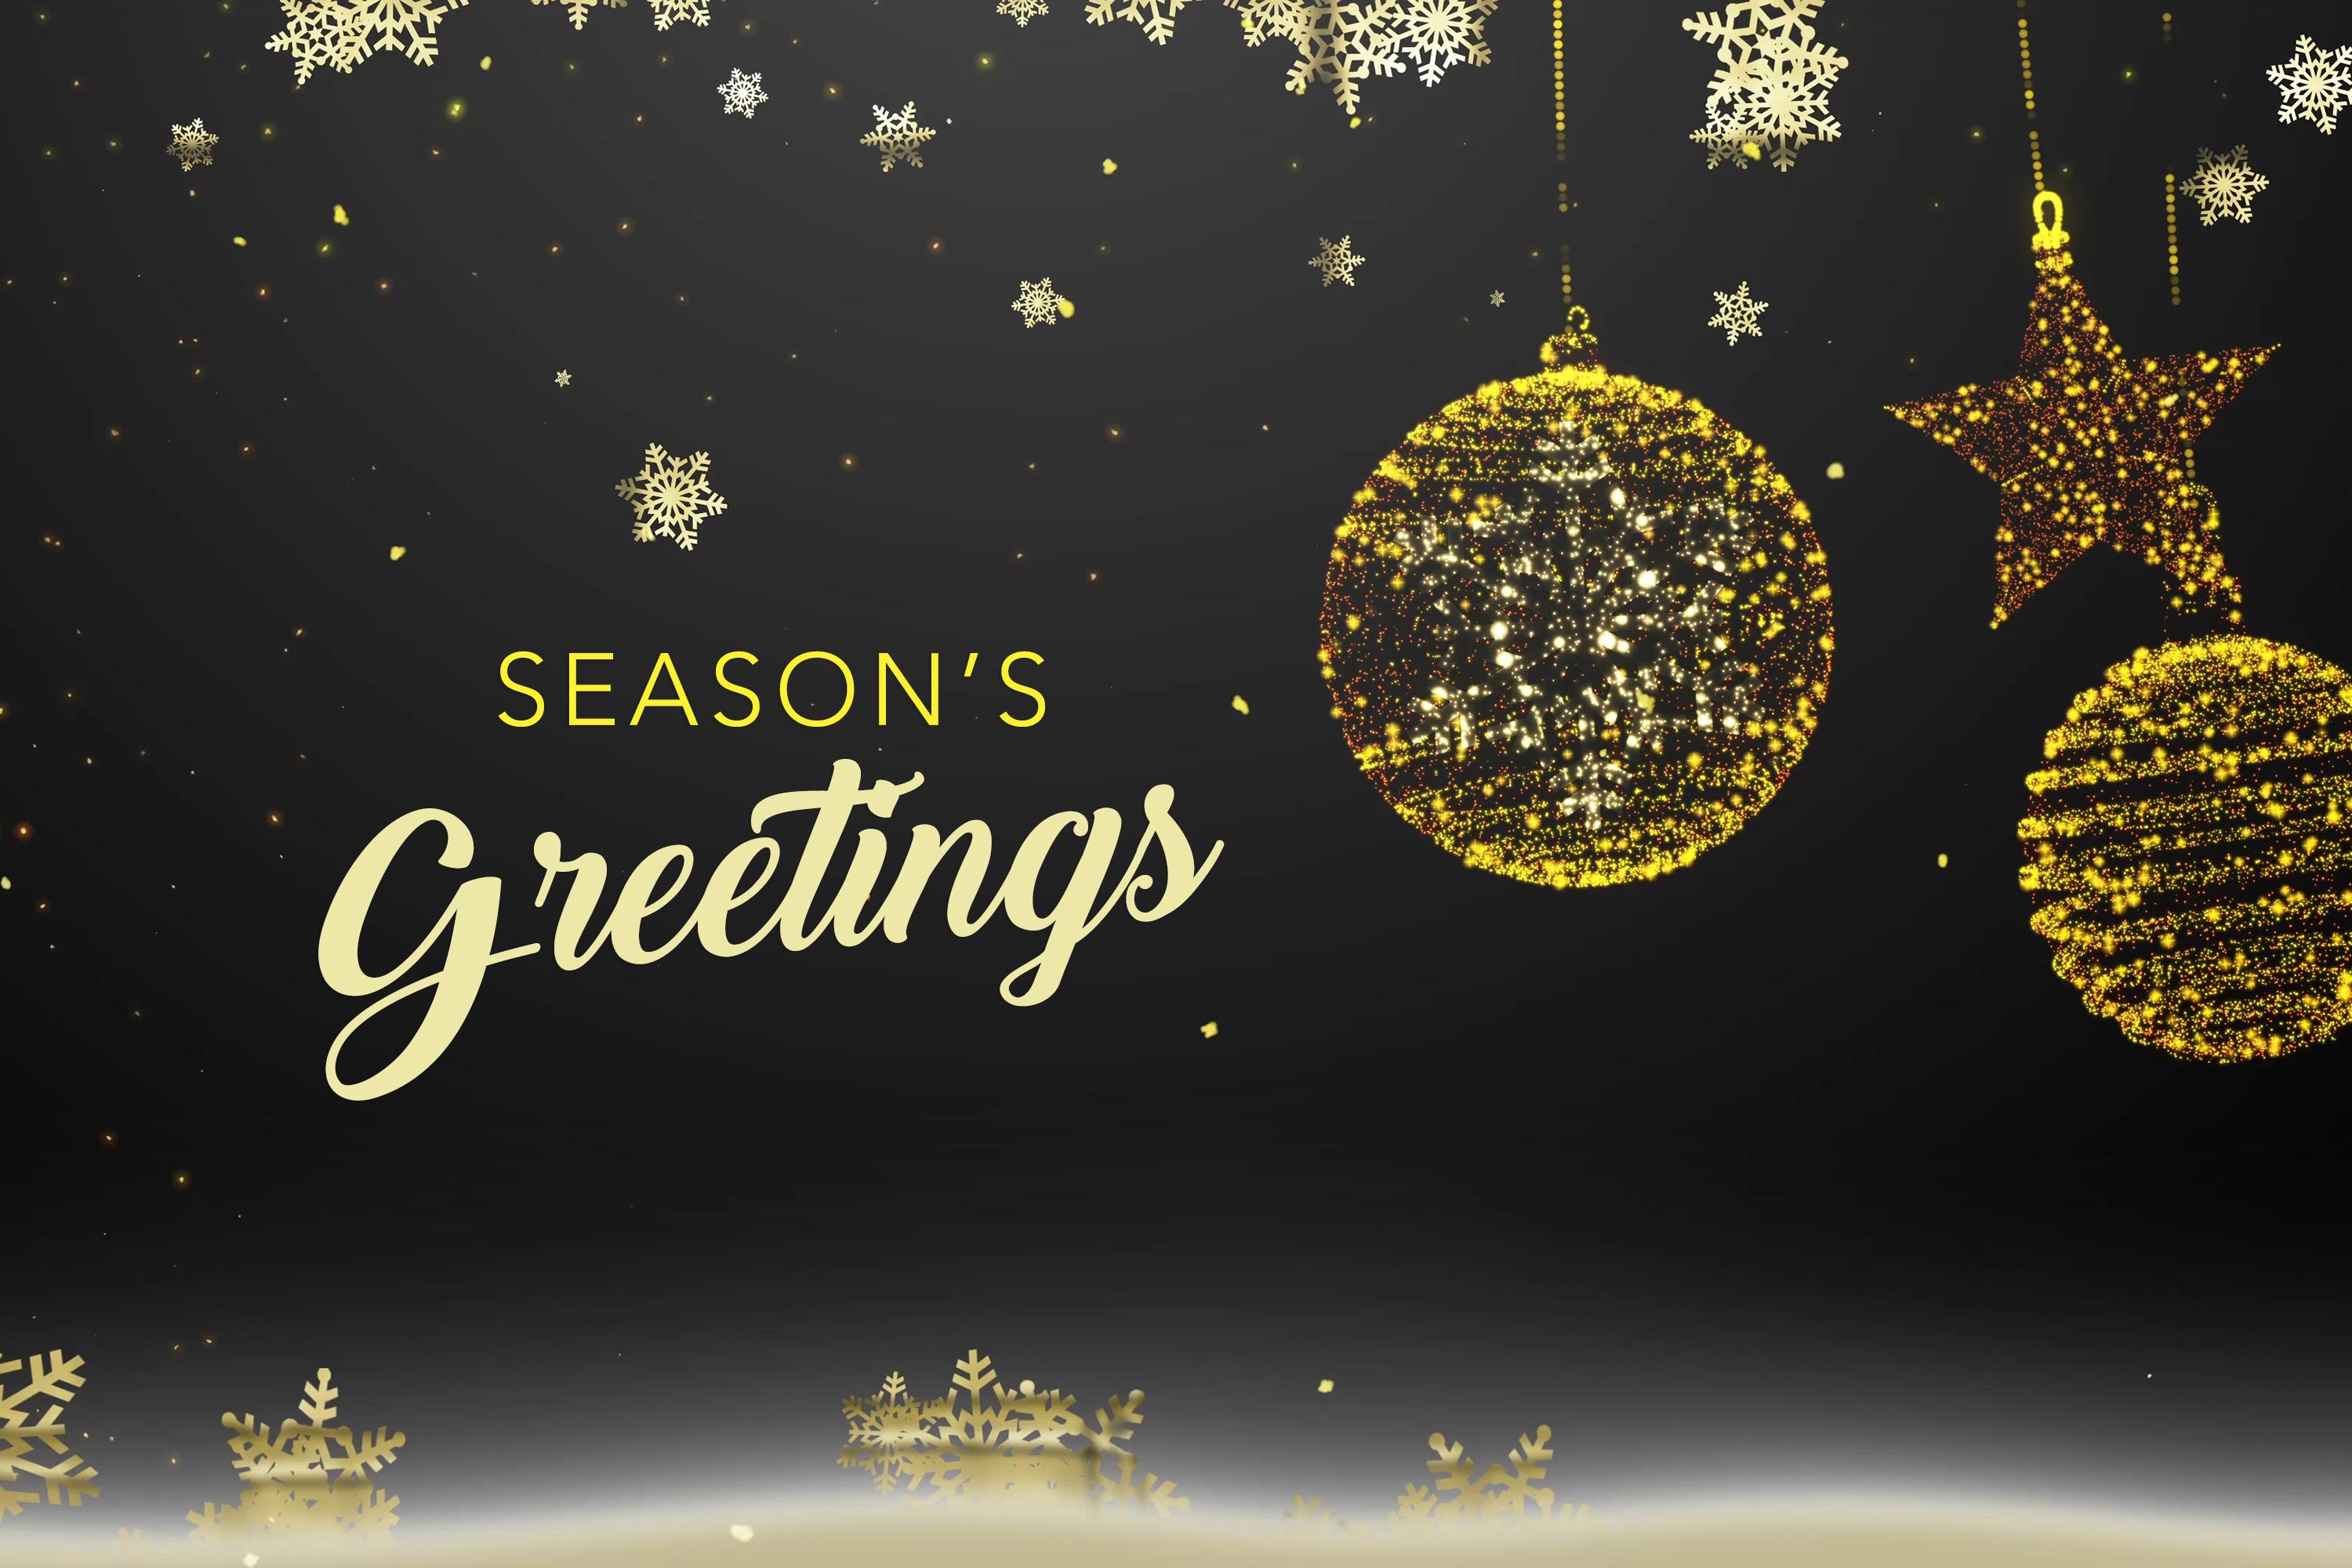 Seasons Greetings Cards Stock Image HD